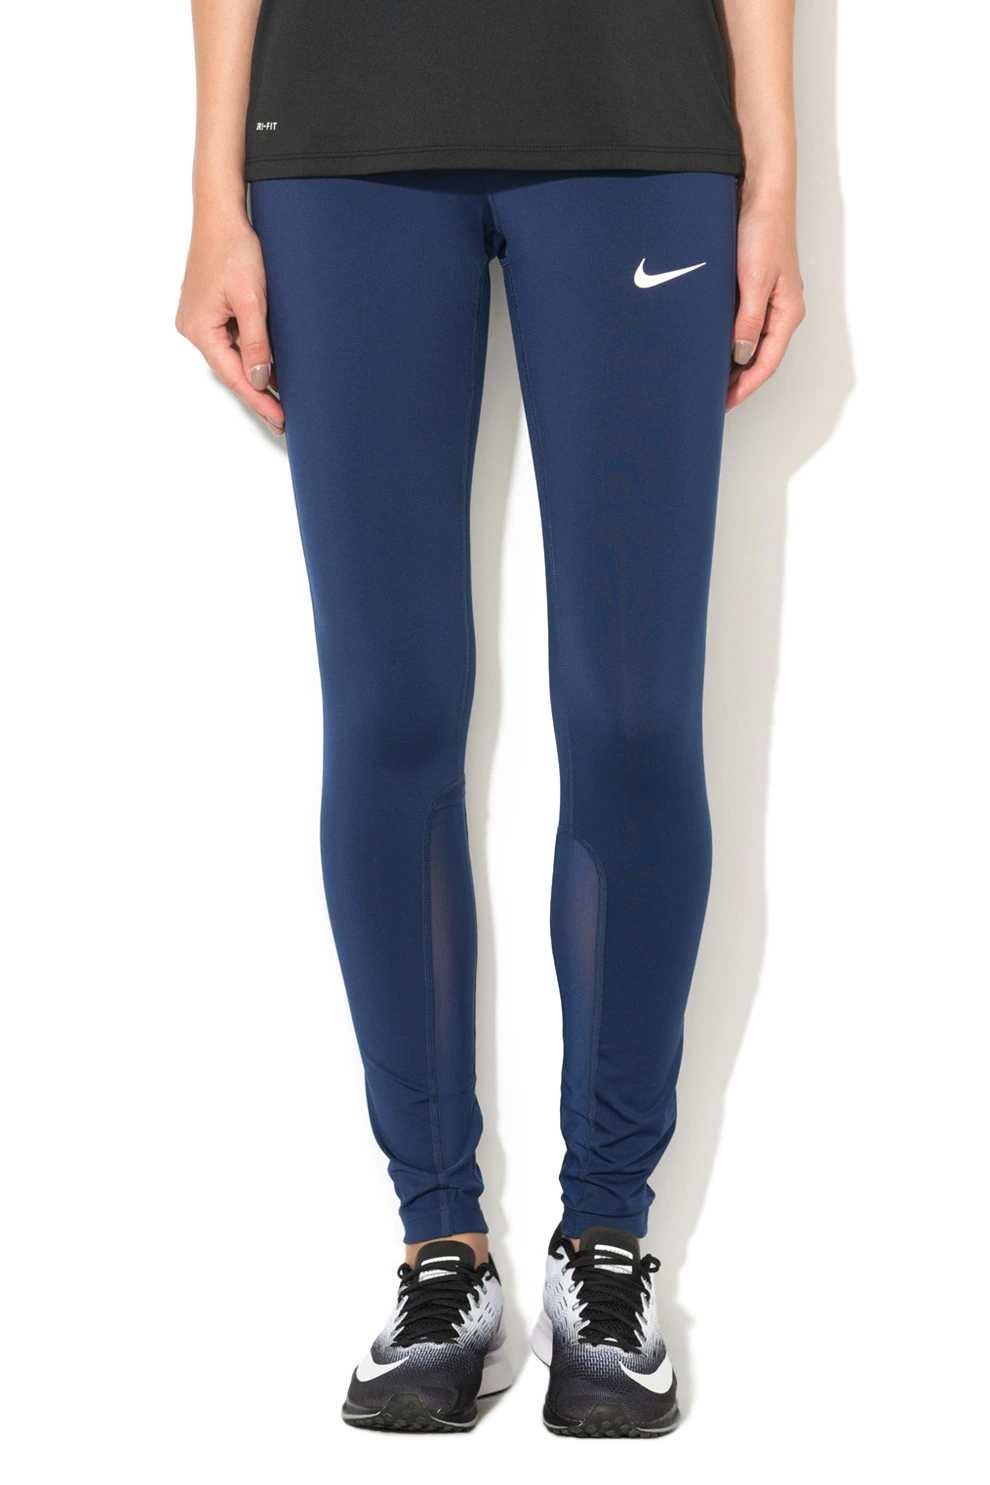 Найк Nike Power Epic running leggings женски клин размер L